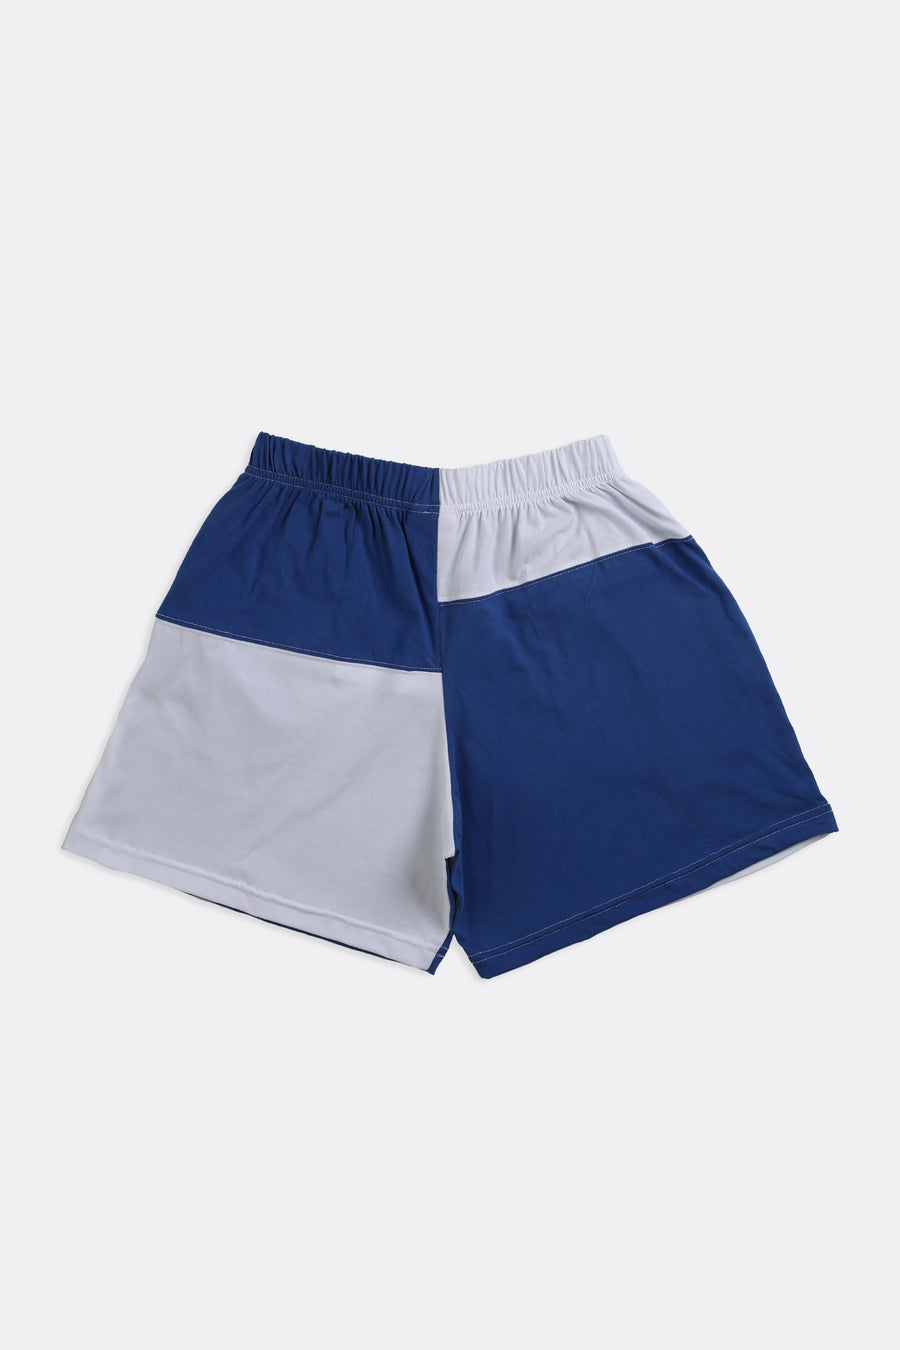 Unisex Rework Polo Patchwork Tee Shorts - XS, S